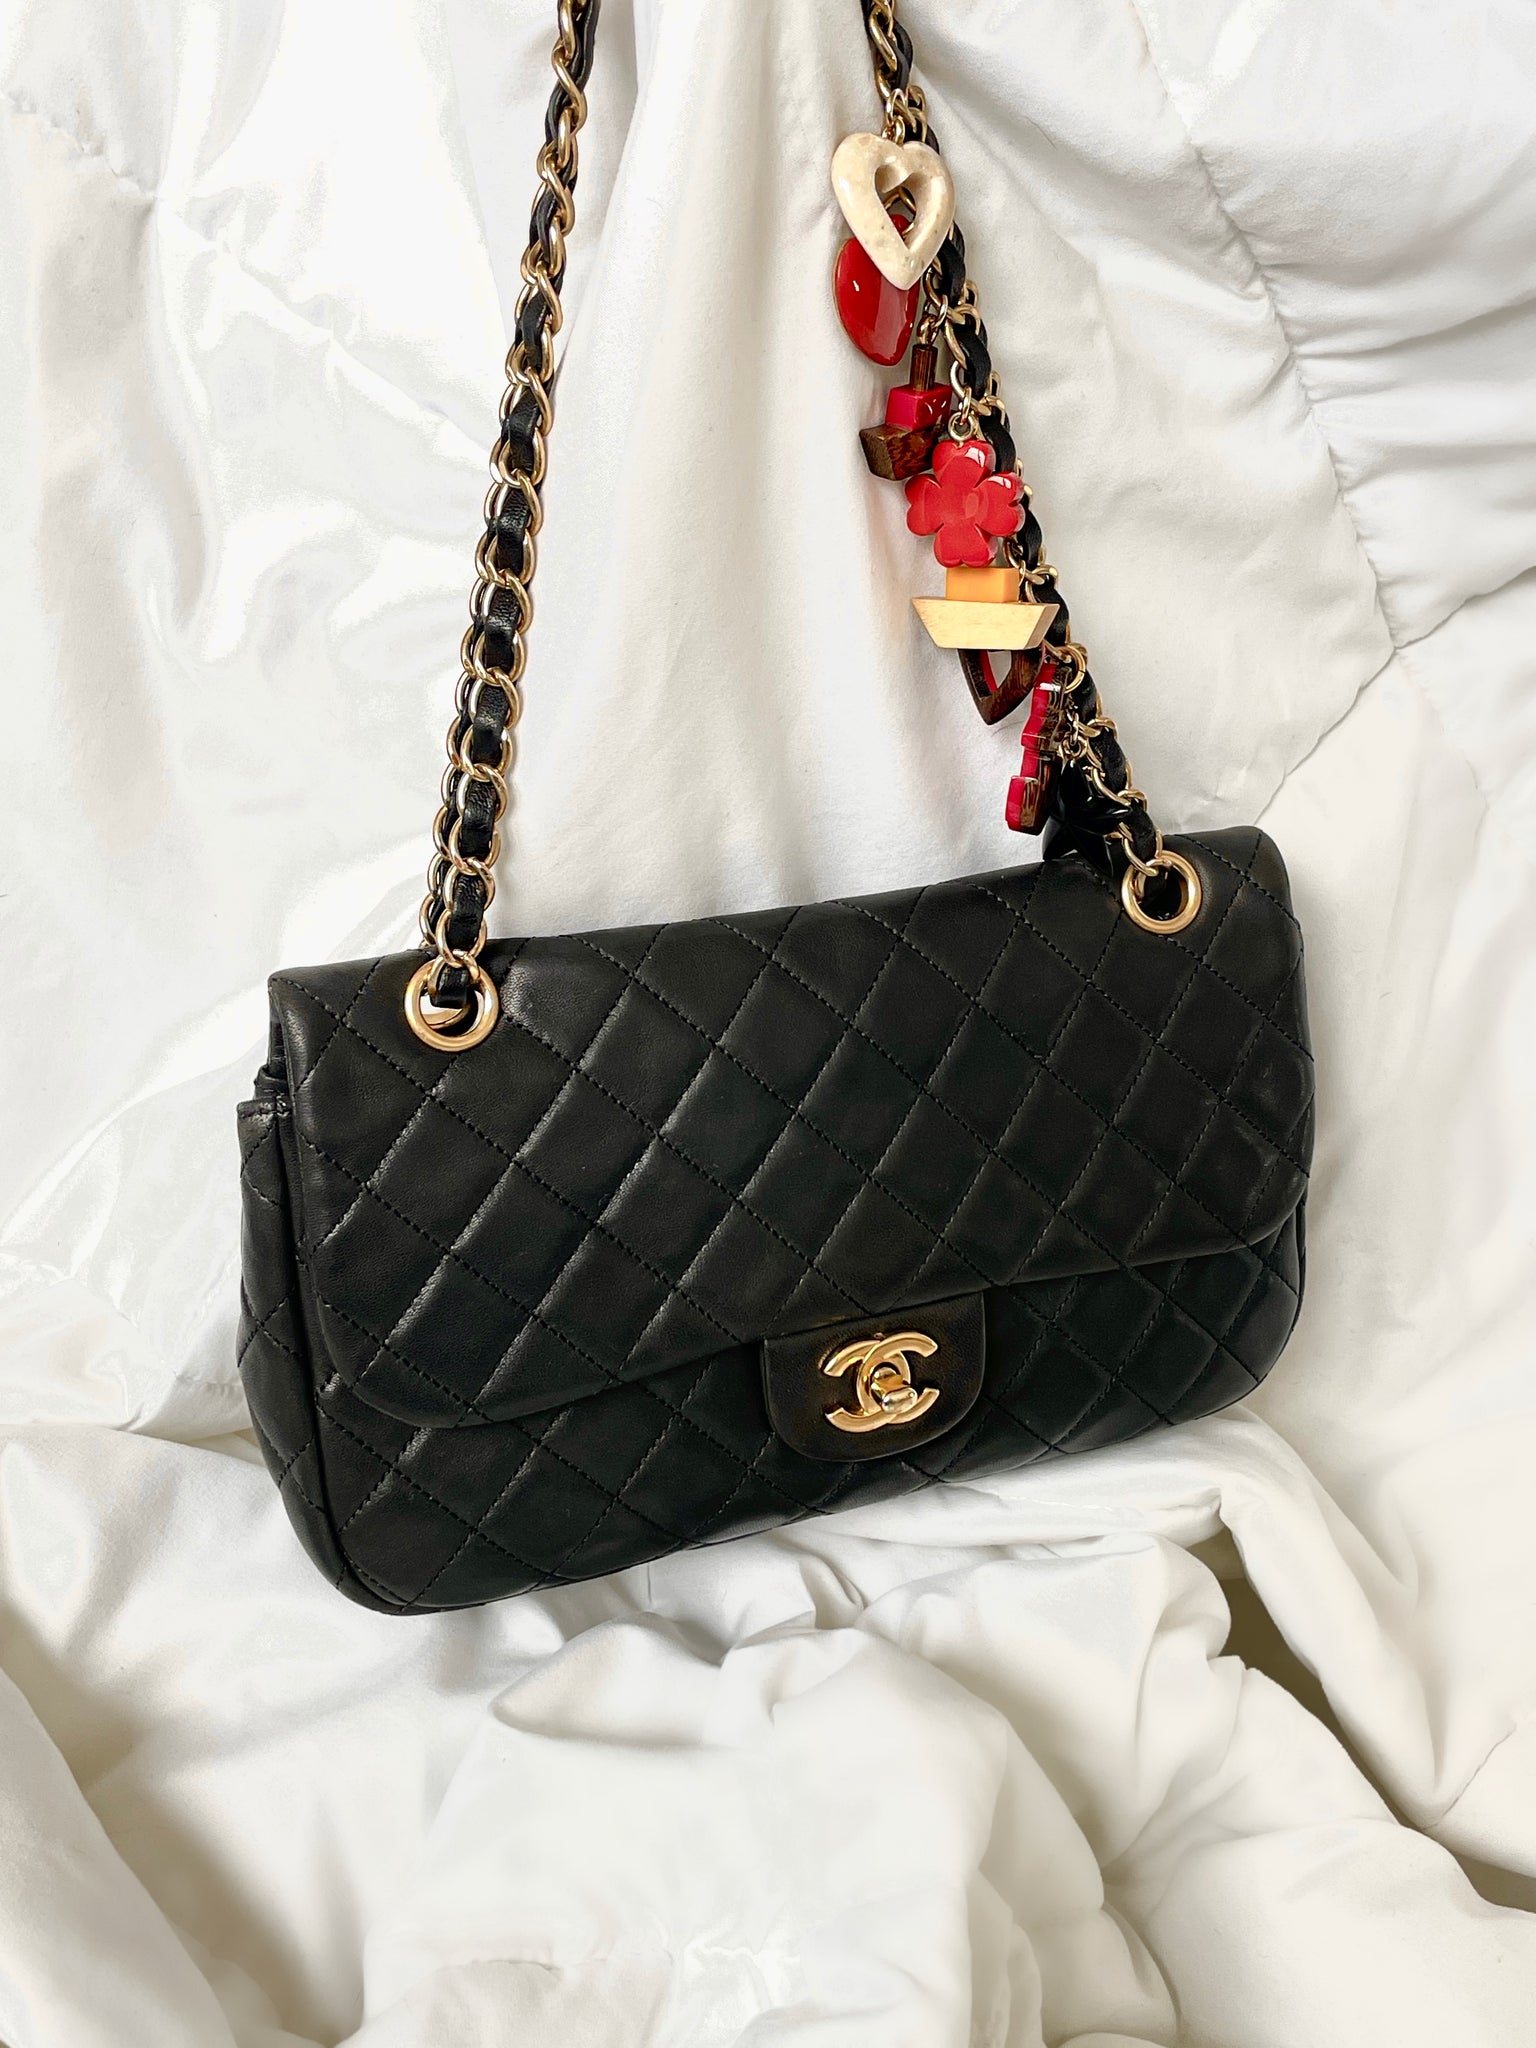 Limited Edition Chanel Medium Classic Flap Bag